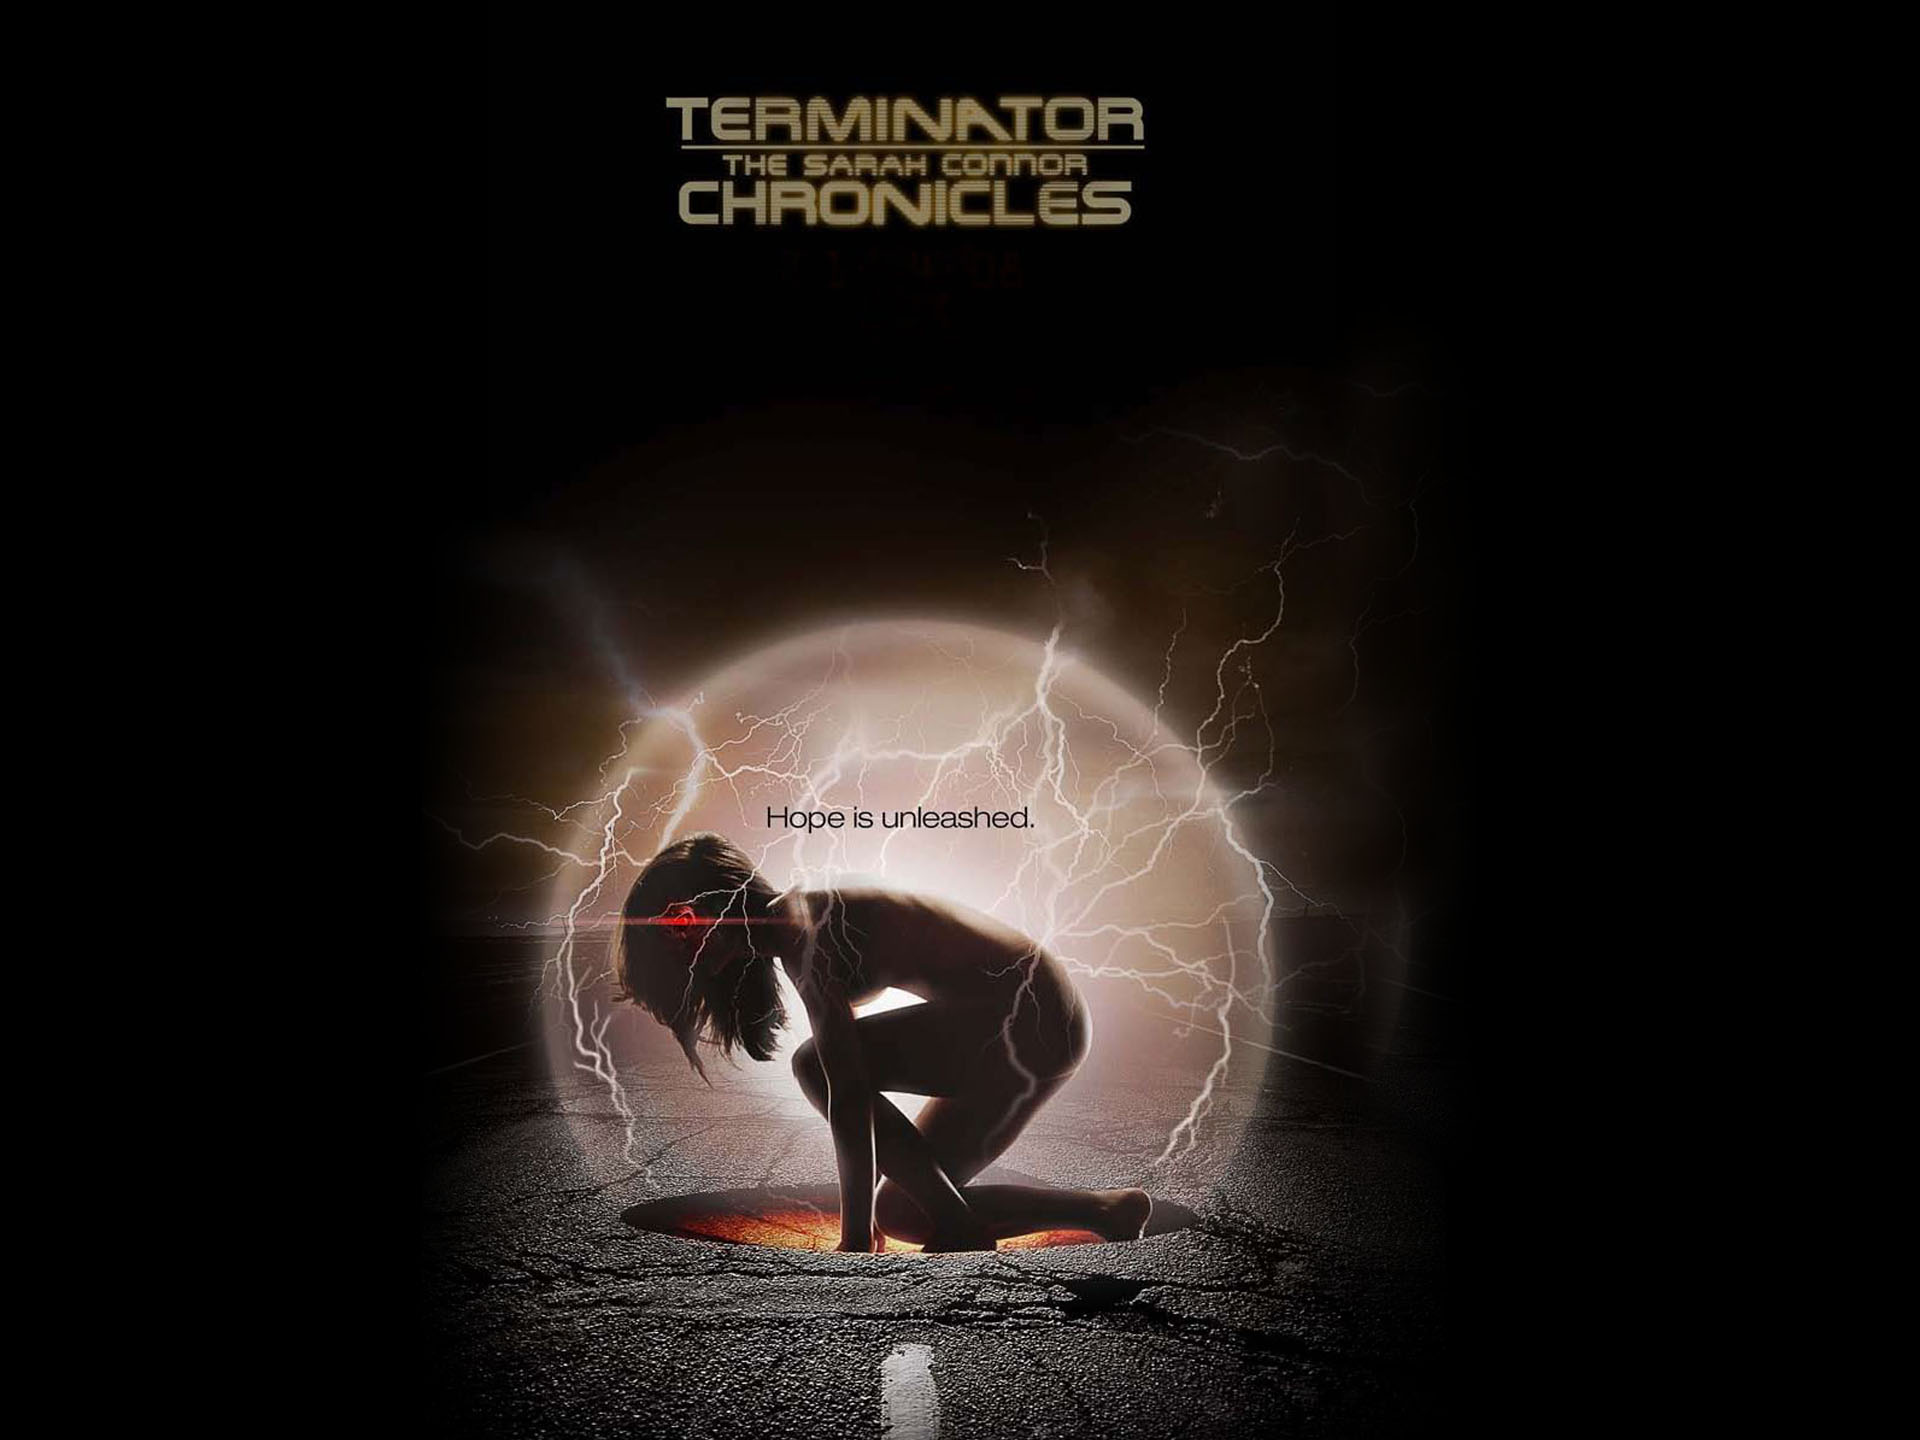 Terminator - The Sarah Connor Chronicles